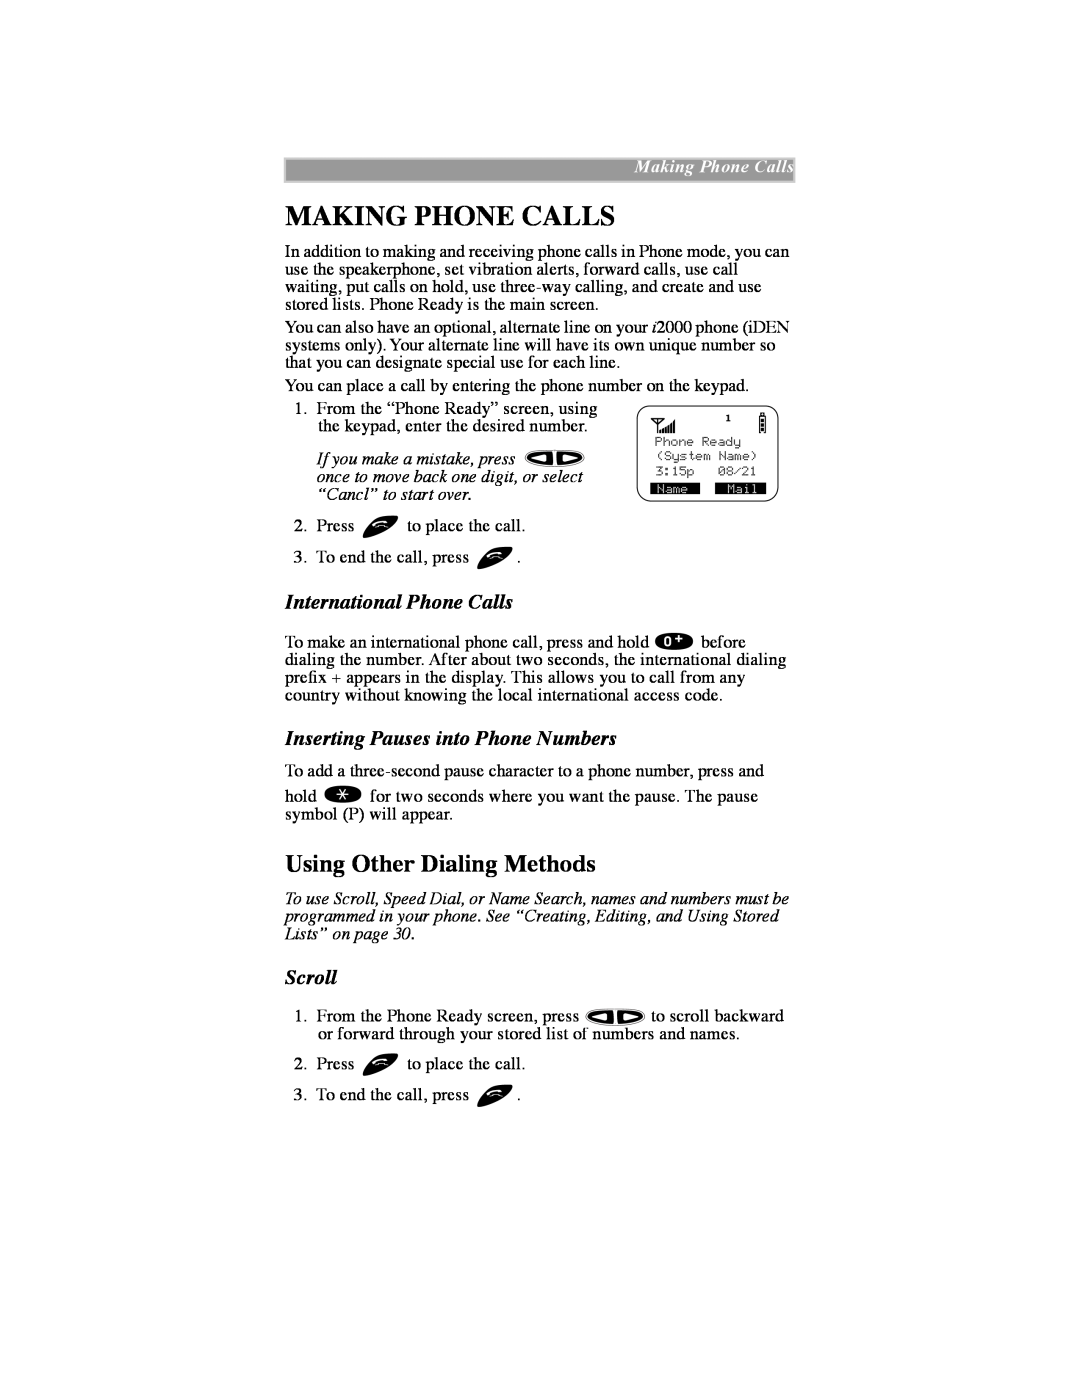 Motorola iDEN manual Making Phone Calls, Using Other Dialing Methods, International Phone Calls, Scroll 